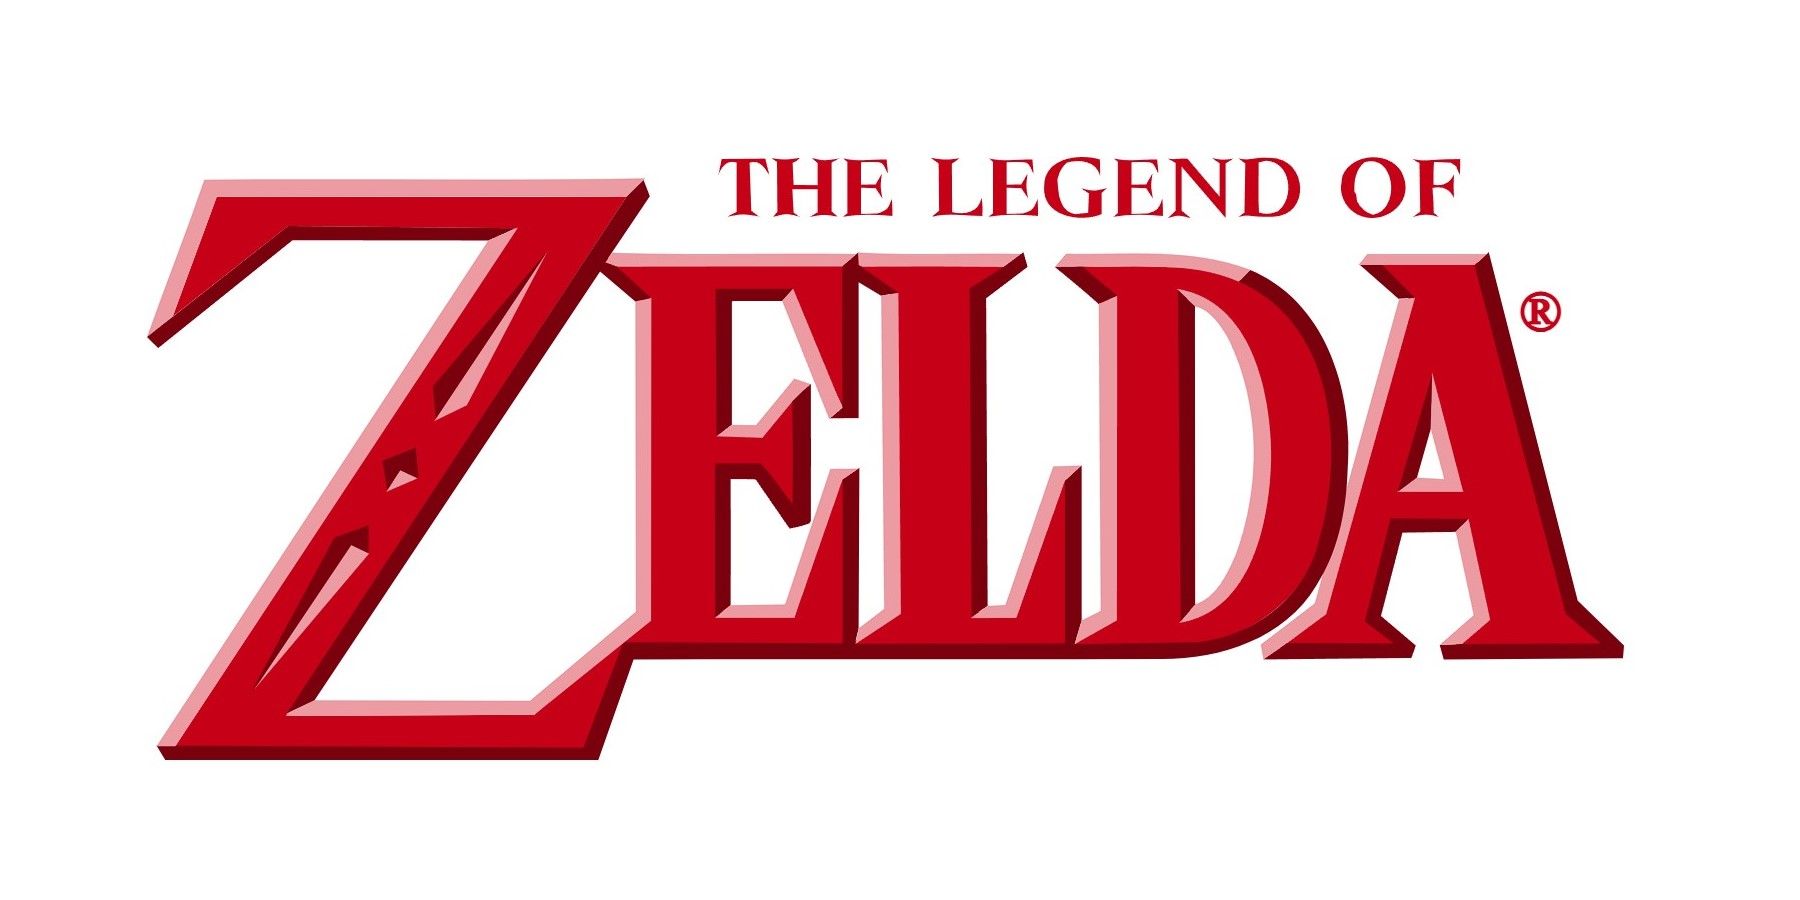 Nintendo Switch Online Subscribers Get 2 Game Boy Color Zelda Games to Play